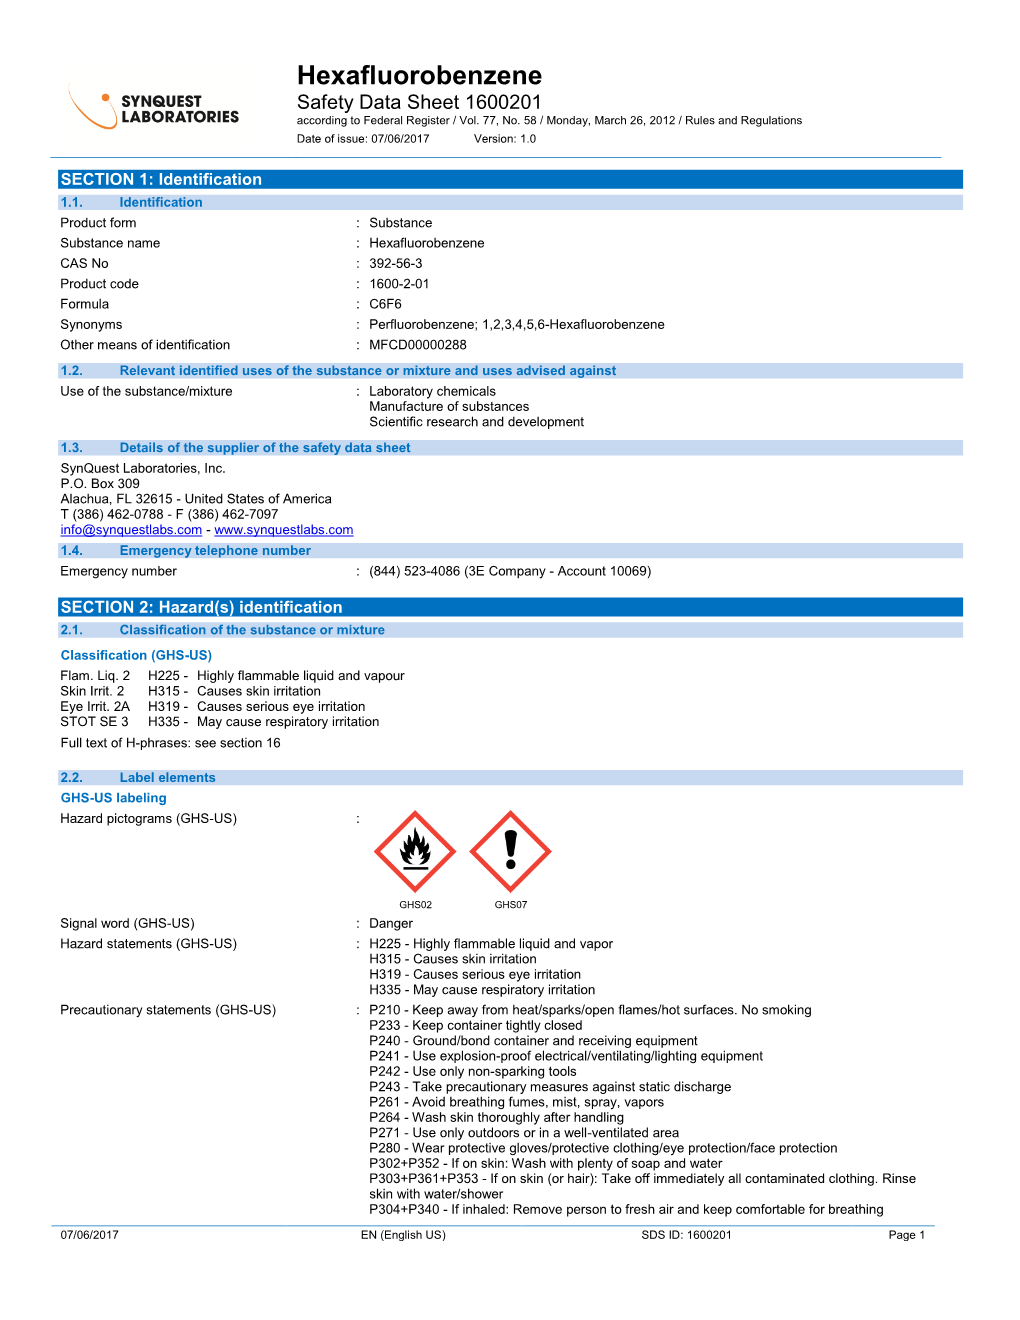 Hexafluorobenzene Safety Data Sheet 1600201 According to Federal Register / Vol